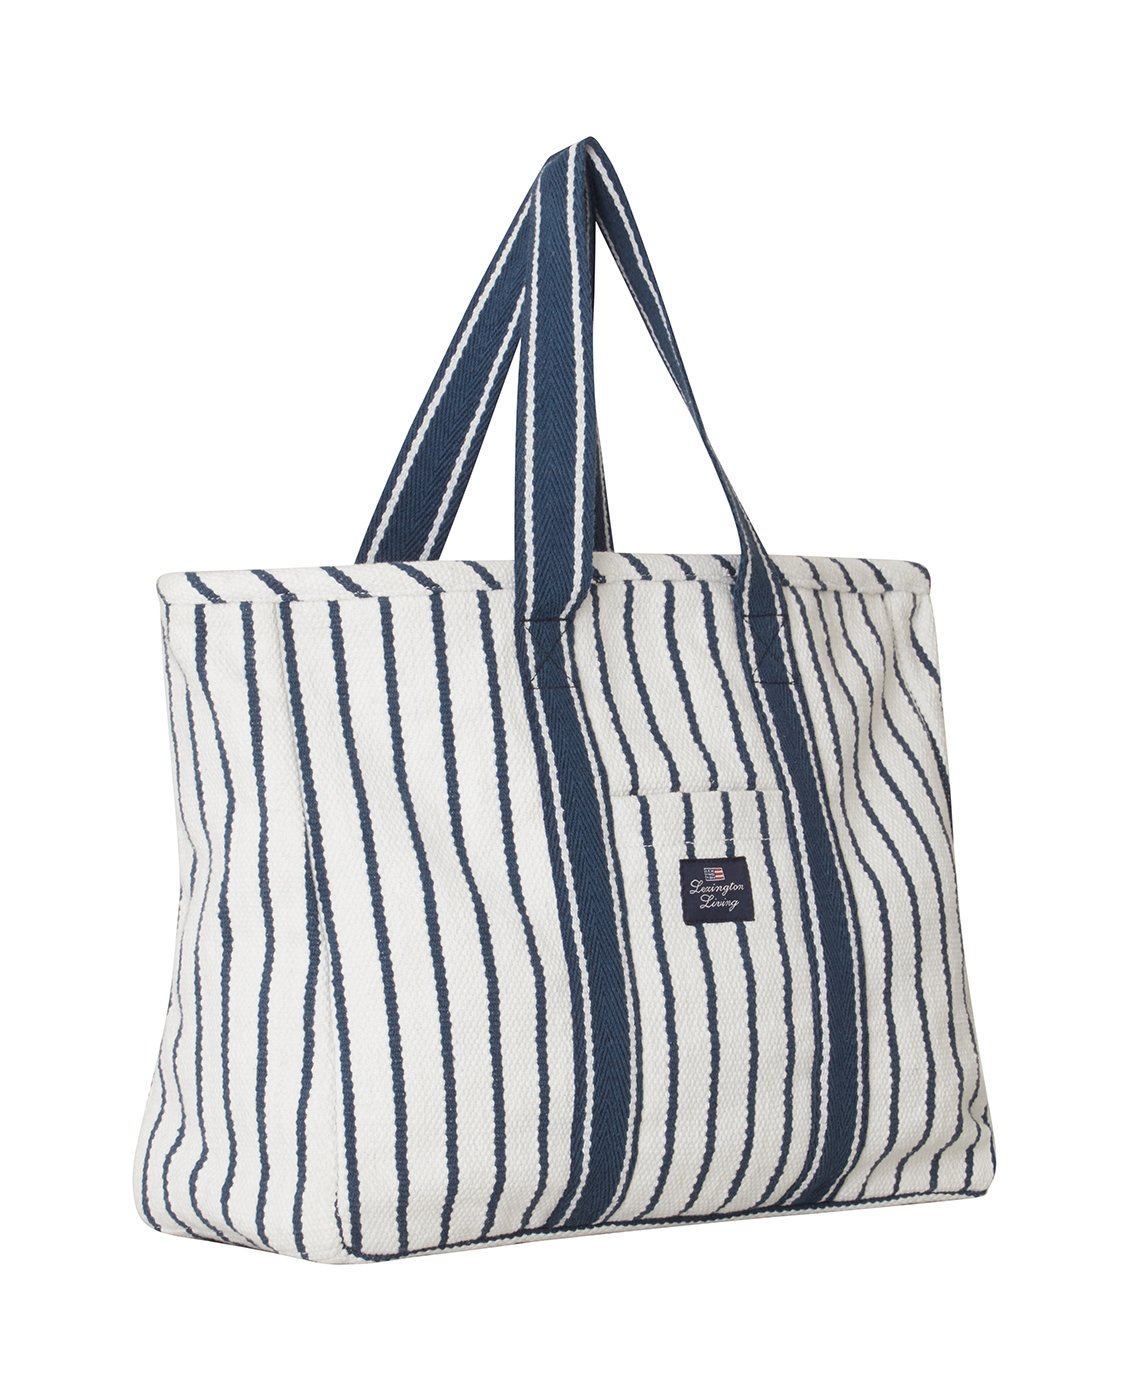 Striped Cooler Bag navy/wh